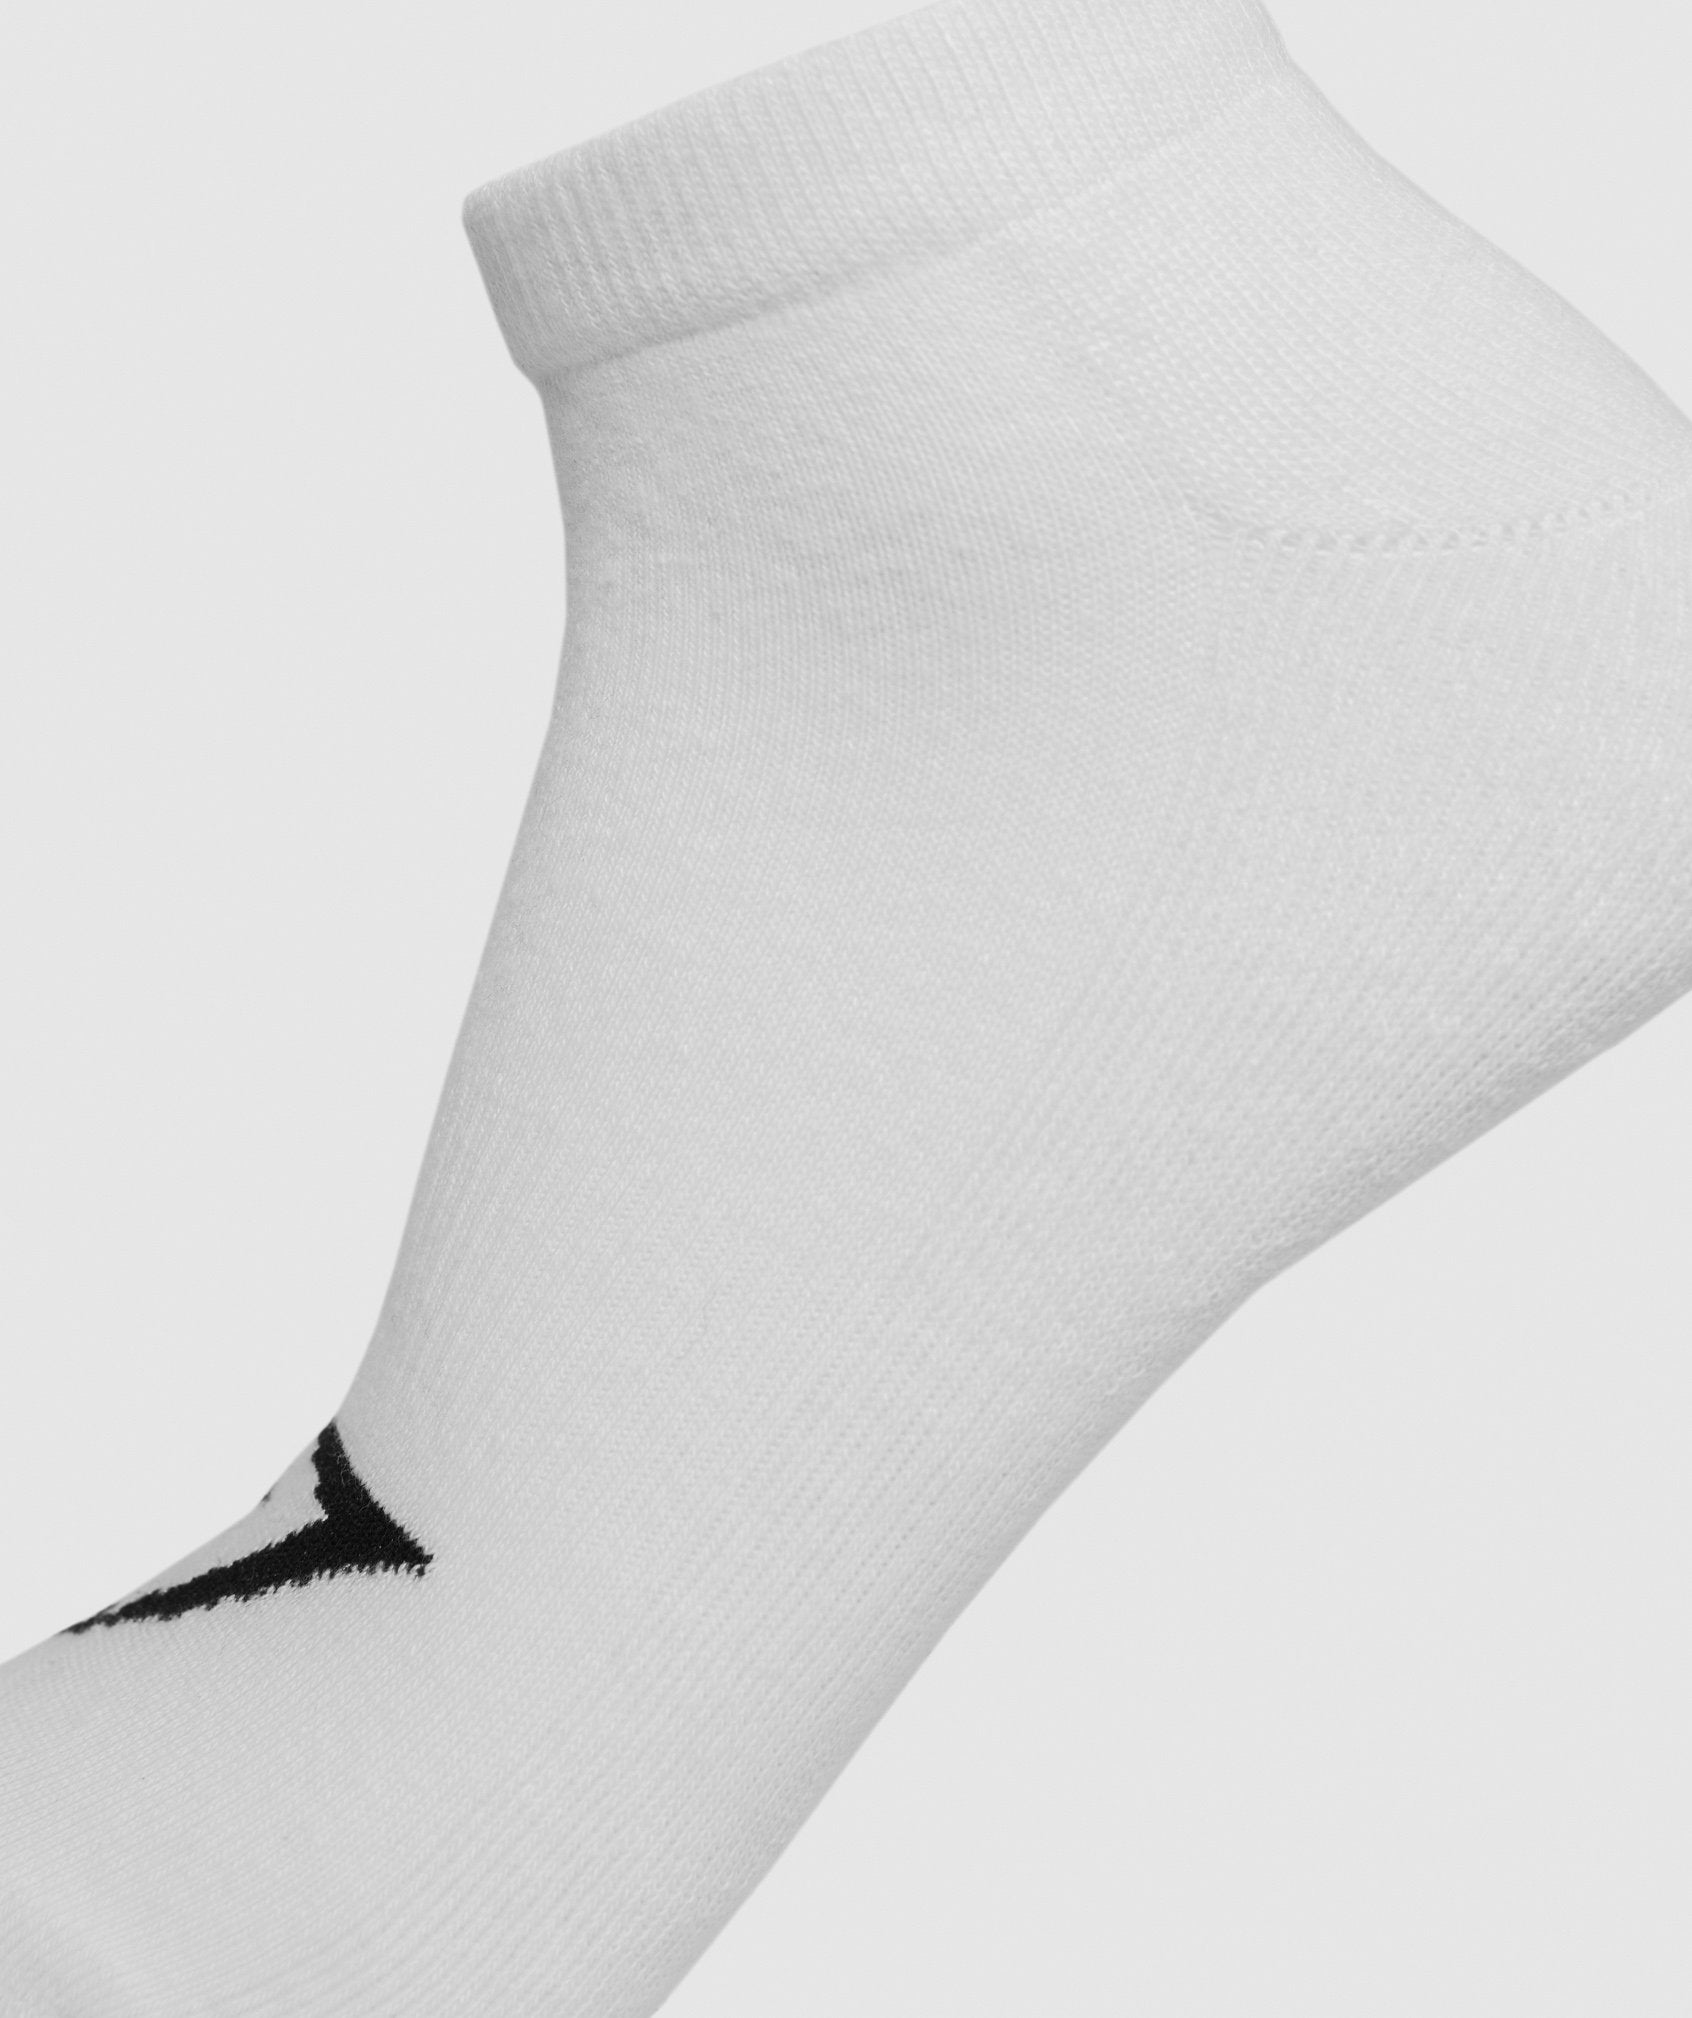 Mens Trainer Socks (3pk) in White/Grey Marl/Black - view 3